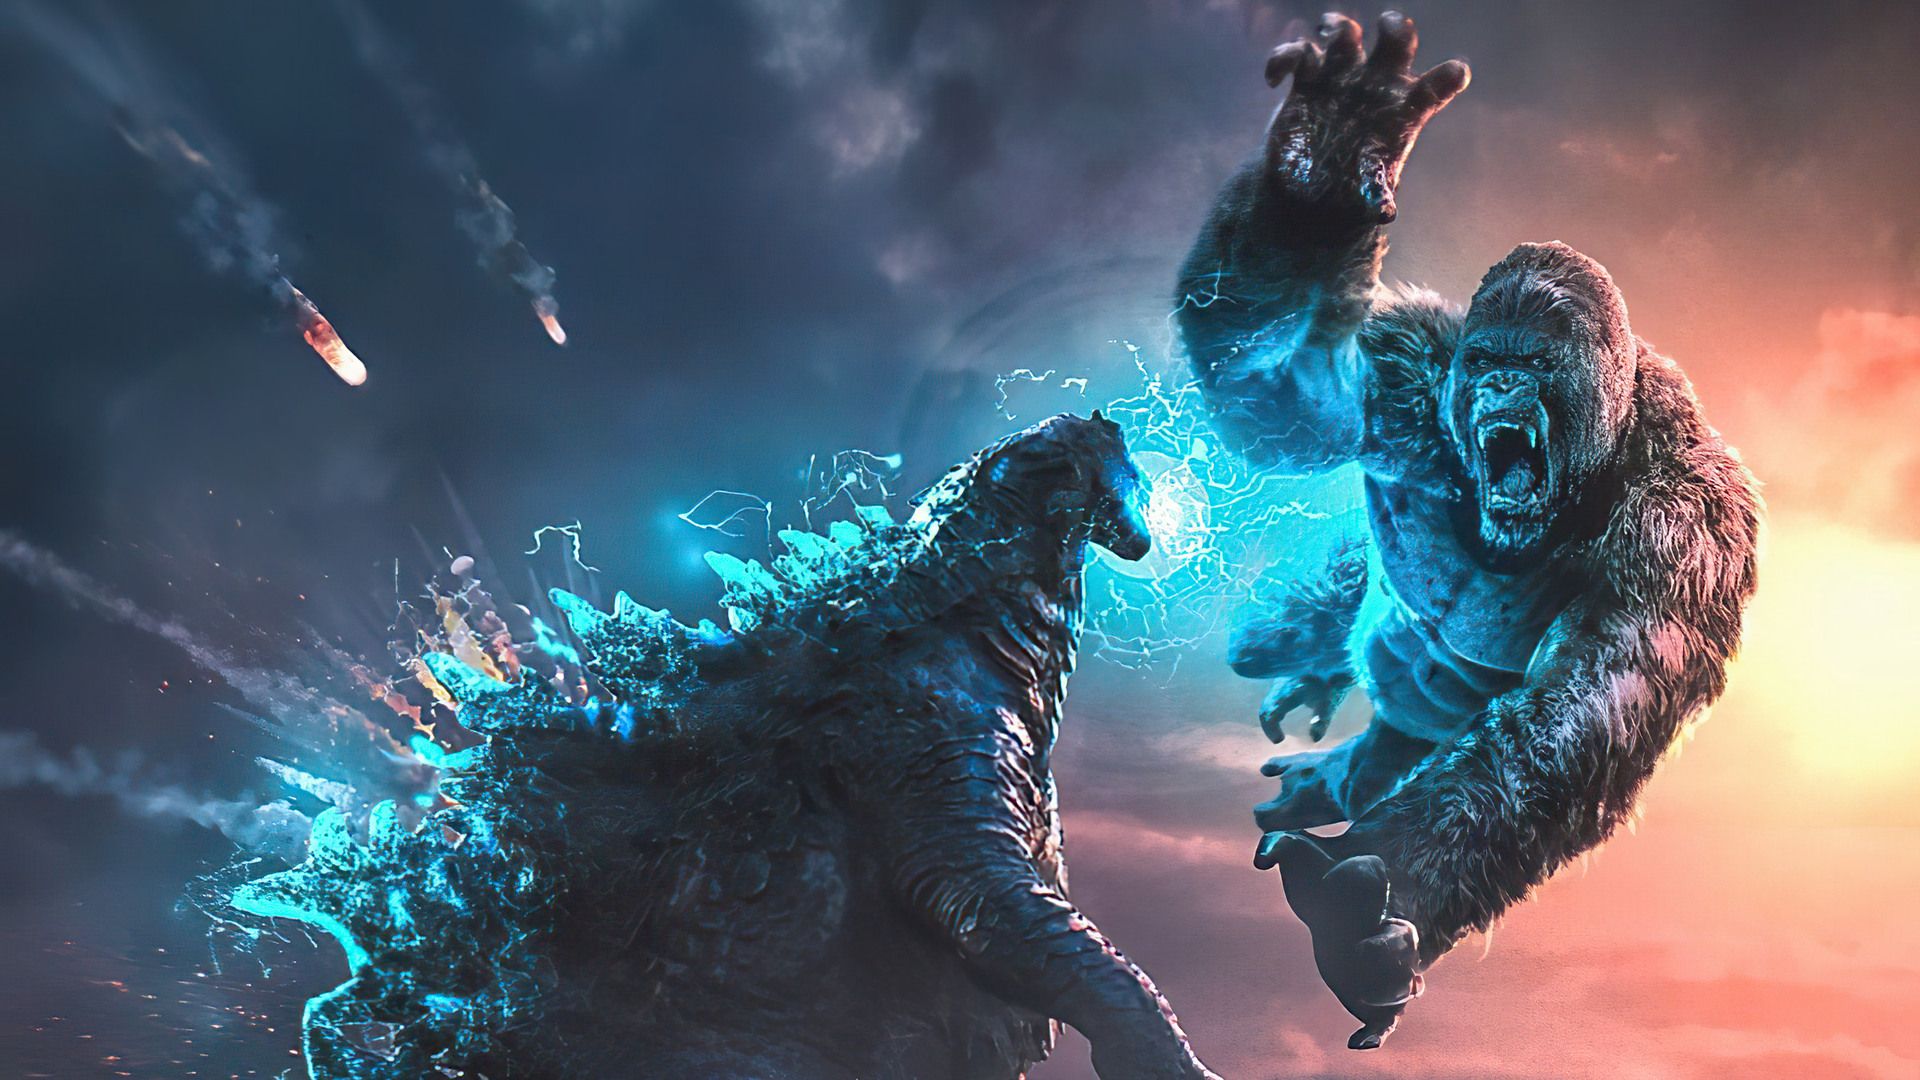 King Kong Versus Godzilla Wallpapers Hd Picture Image | Sexiz Pix